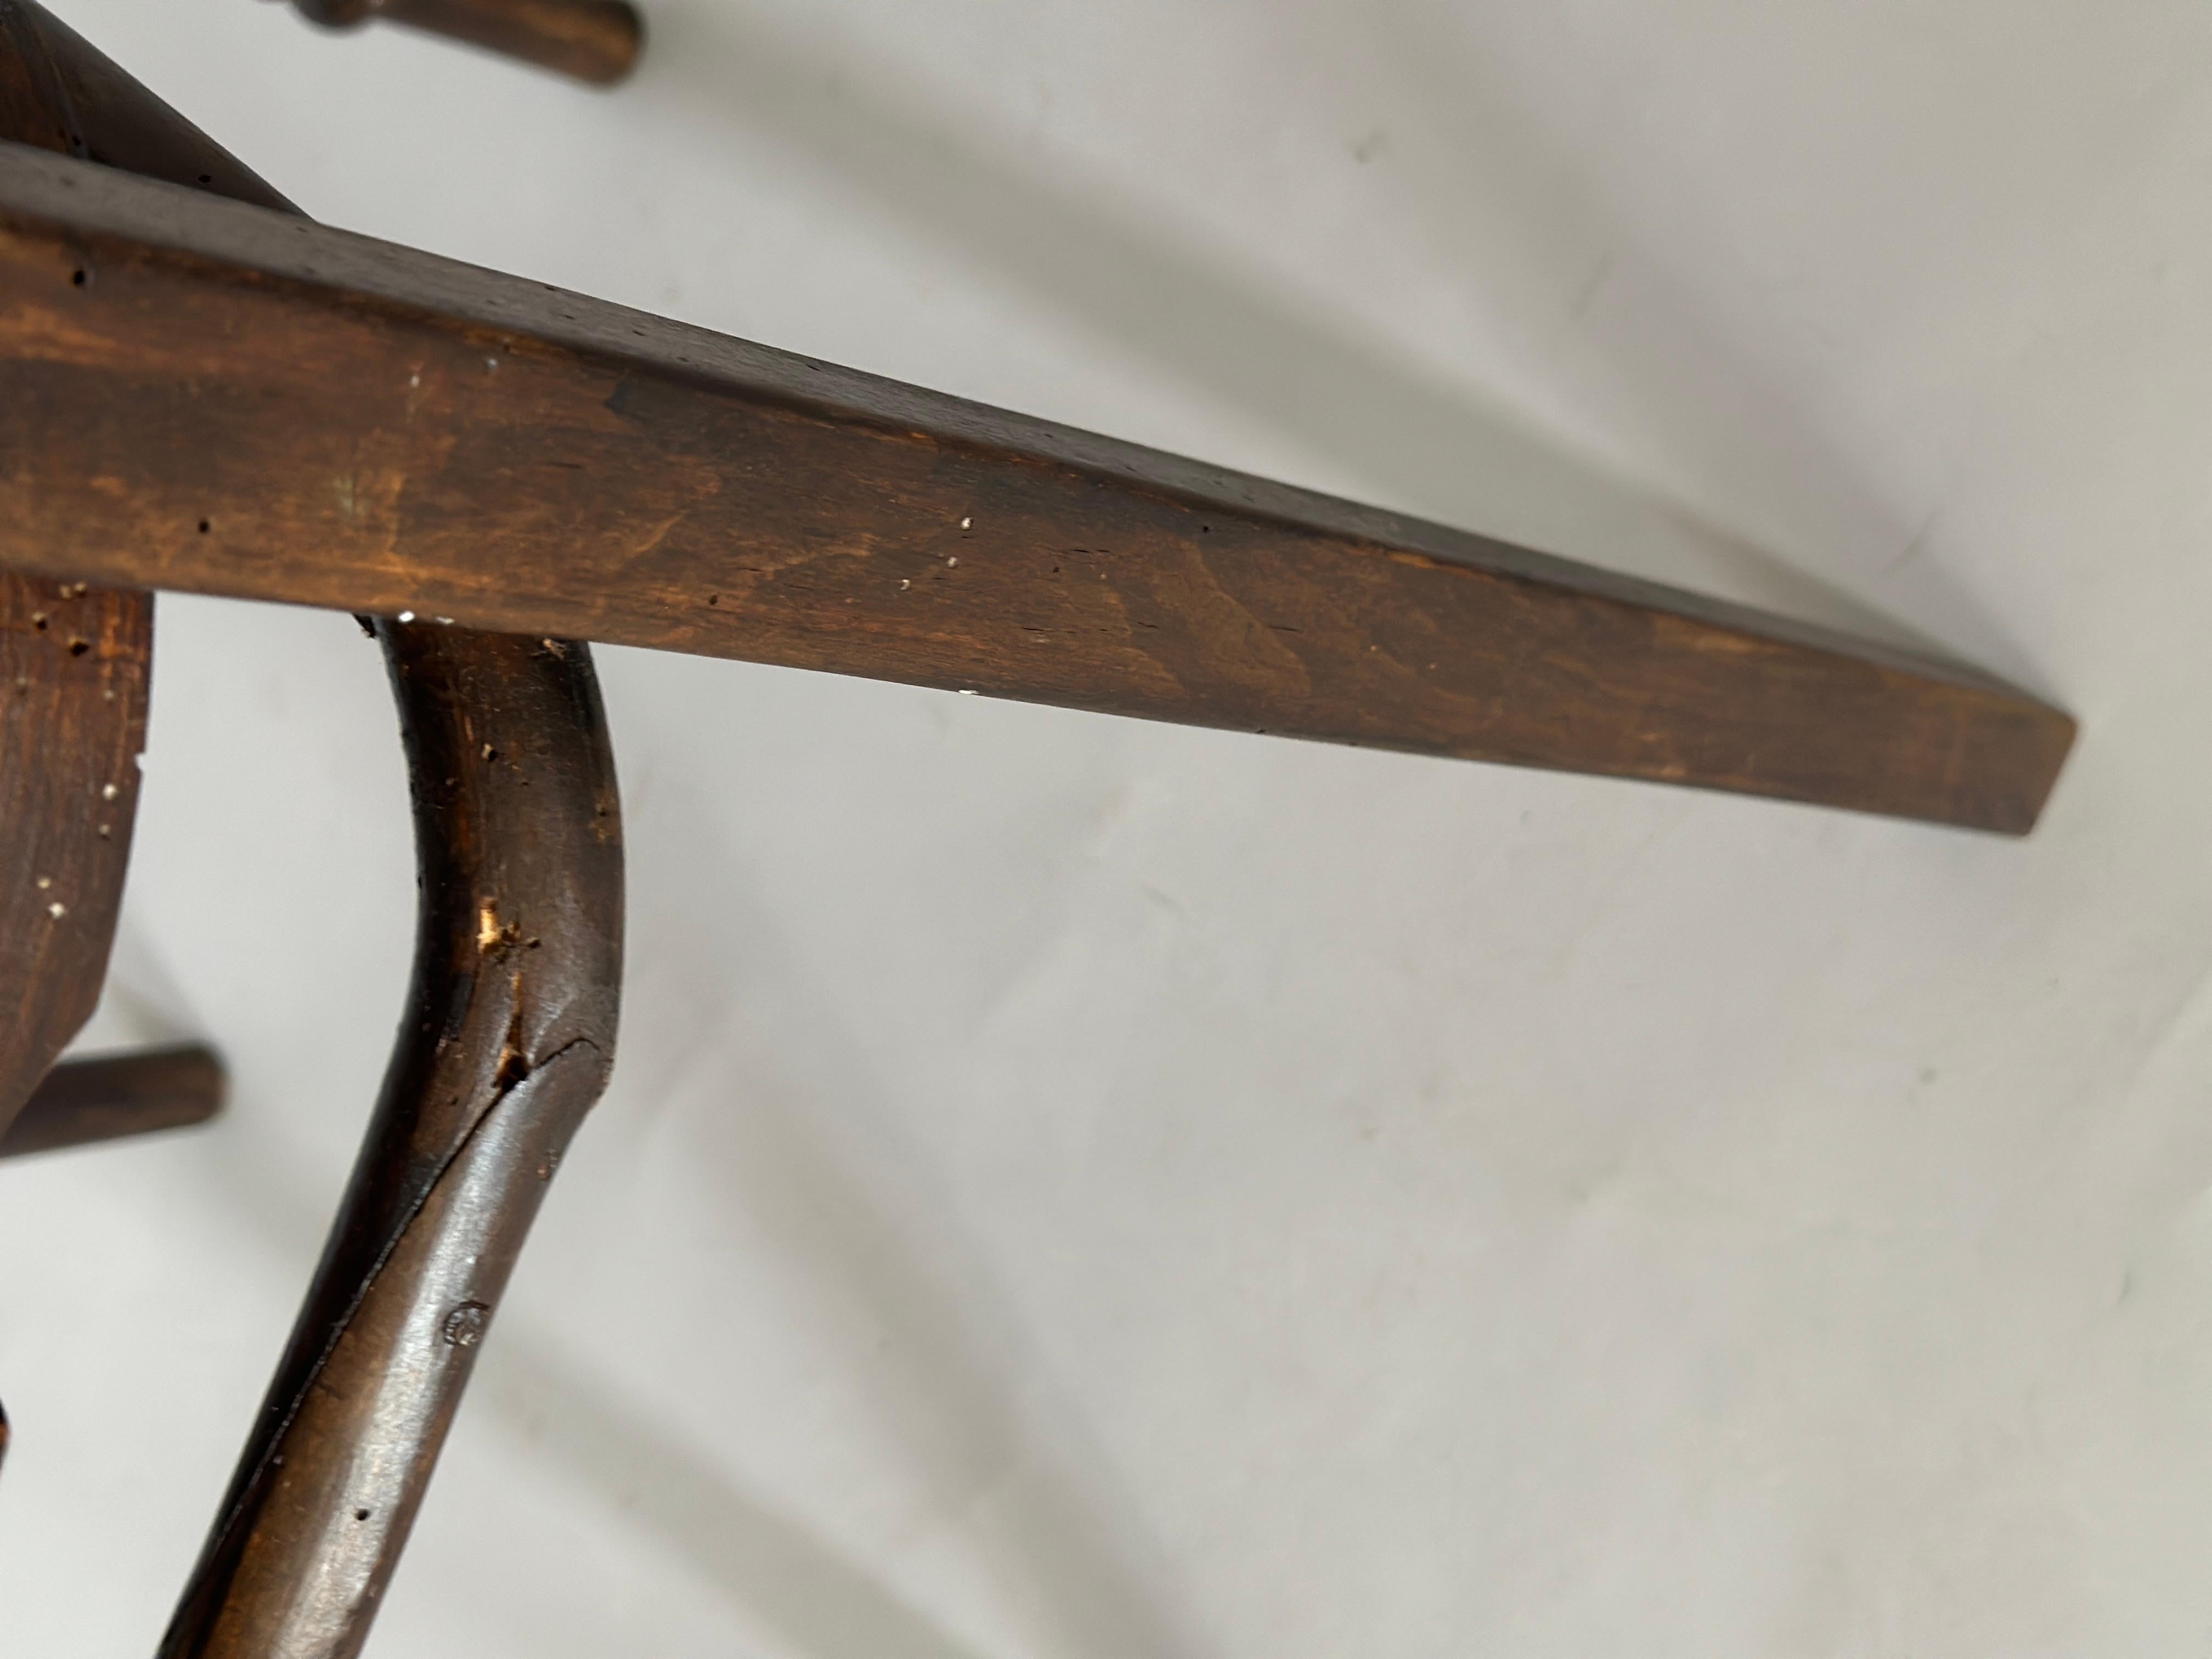 Thonet-Stuhl HO. 41 1905er Jahre (20. Jahrhundert) im Angebot